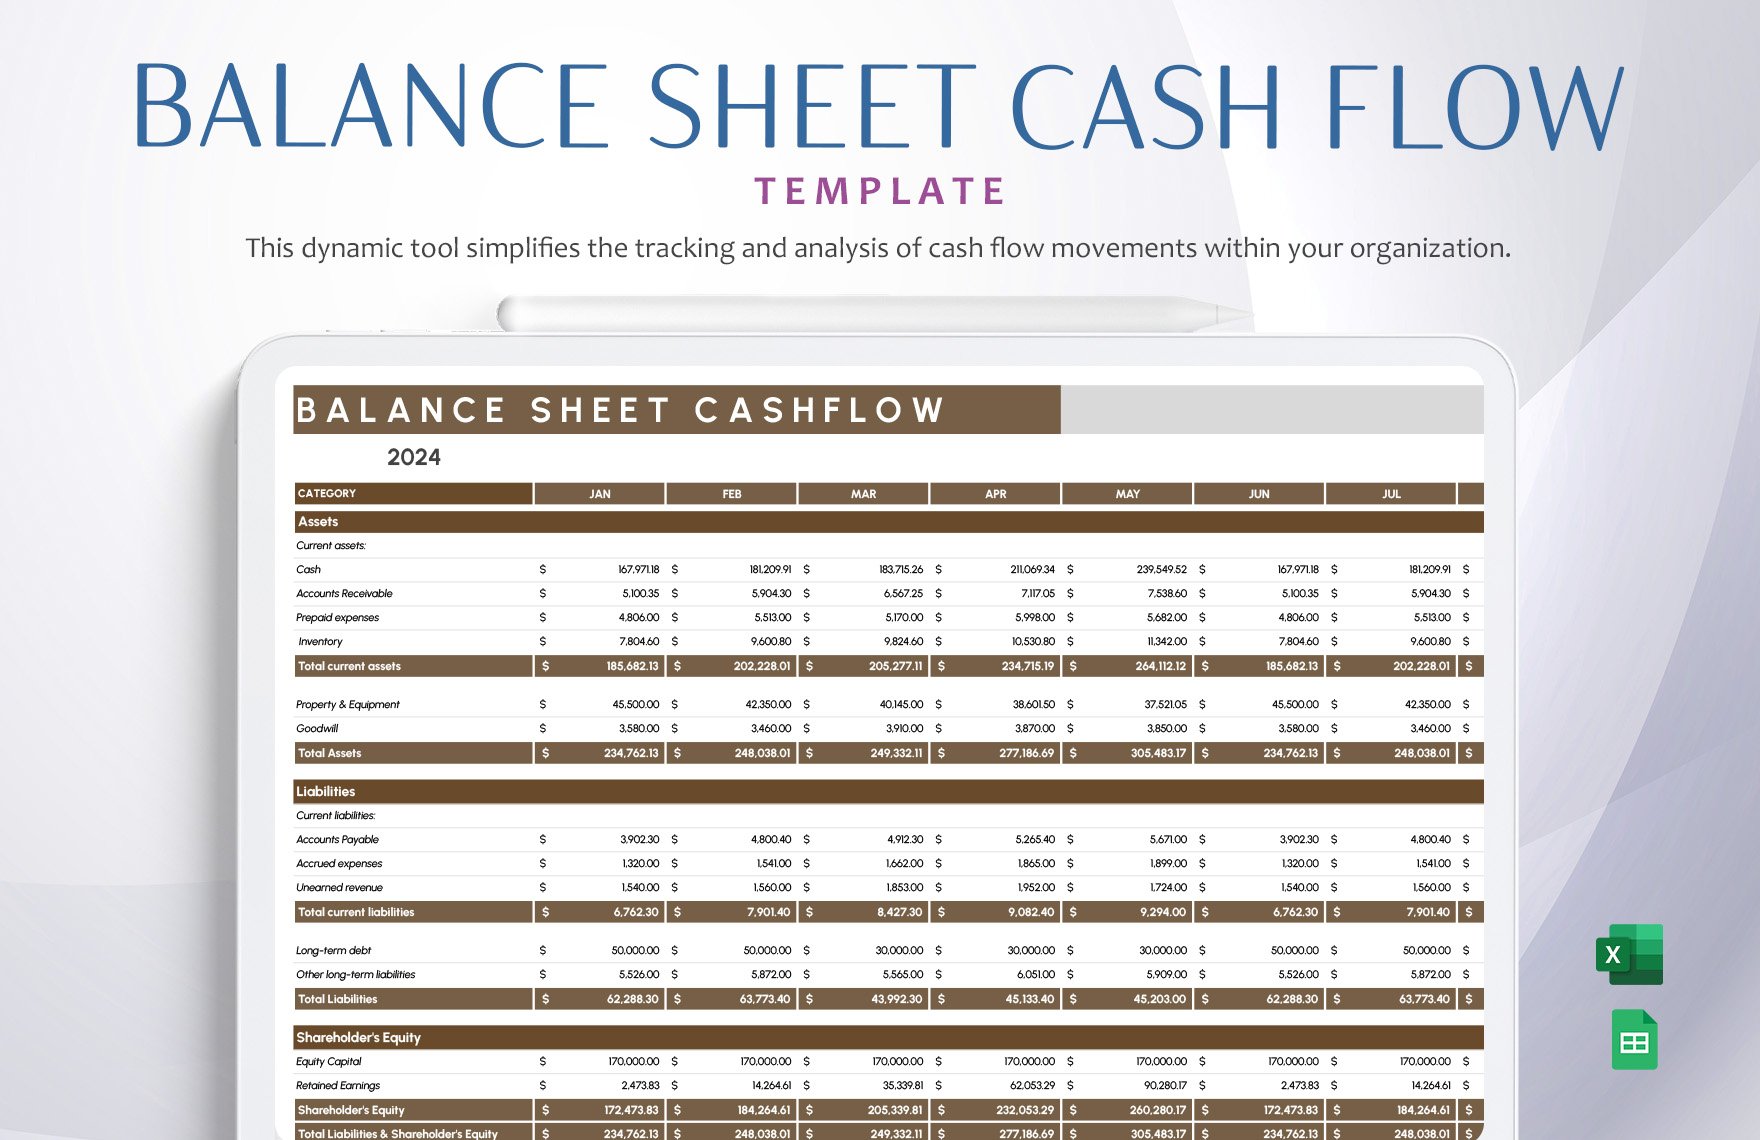 Balance Sheet Cash Flow Template in Excel, Google Sheets